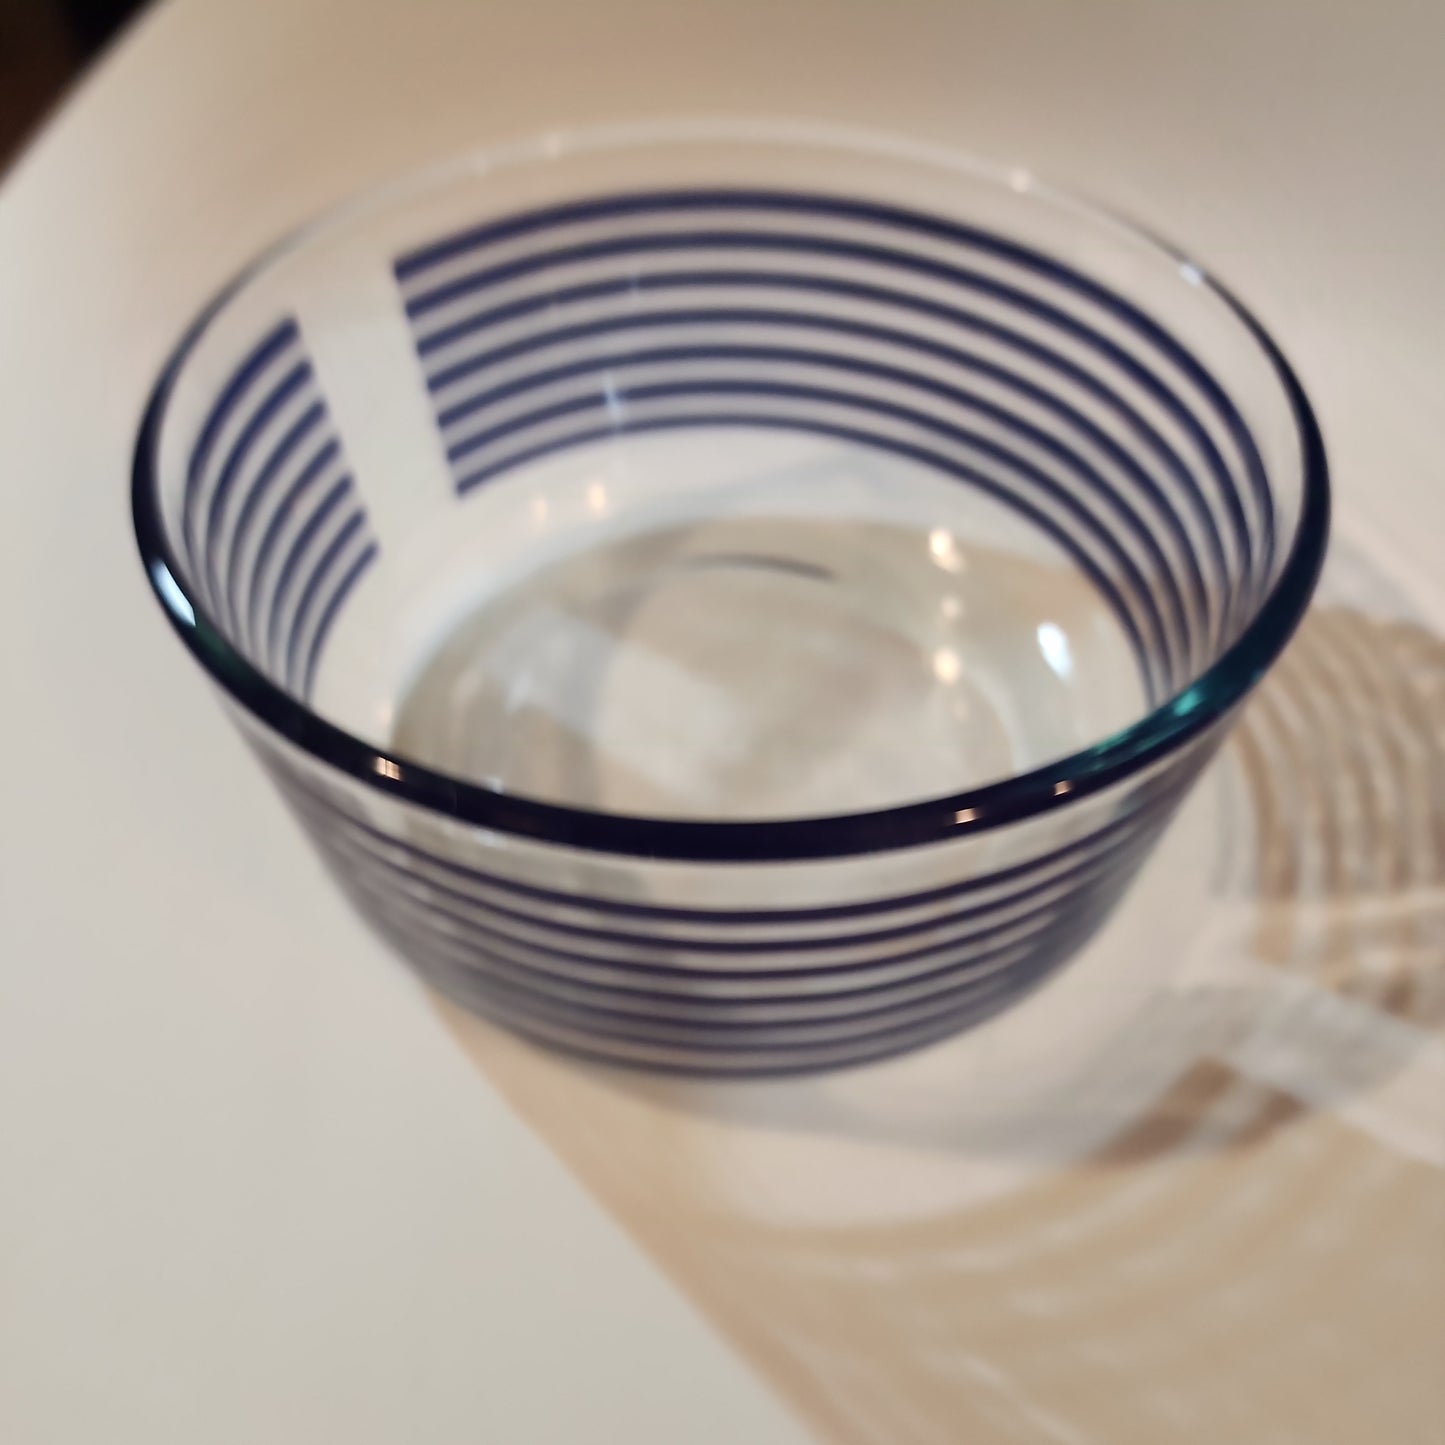 7201 Vntg Pyrex Navy Stripe Clear Glass Bowl